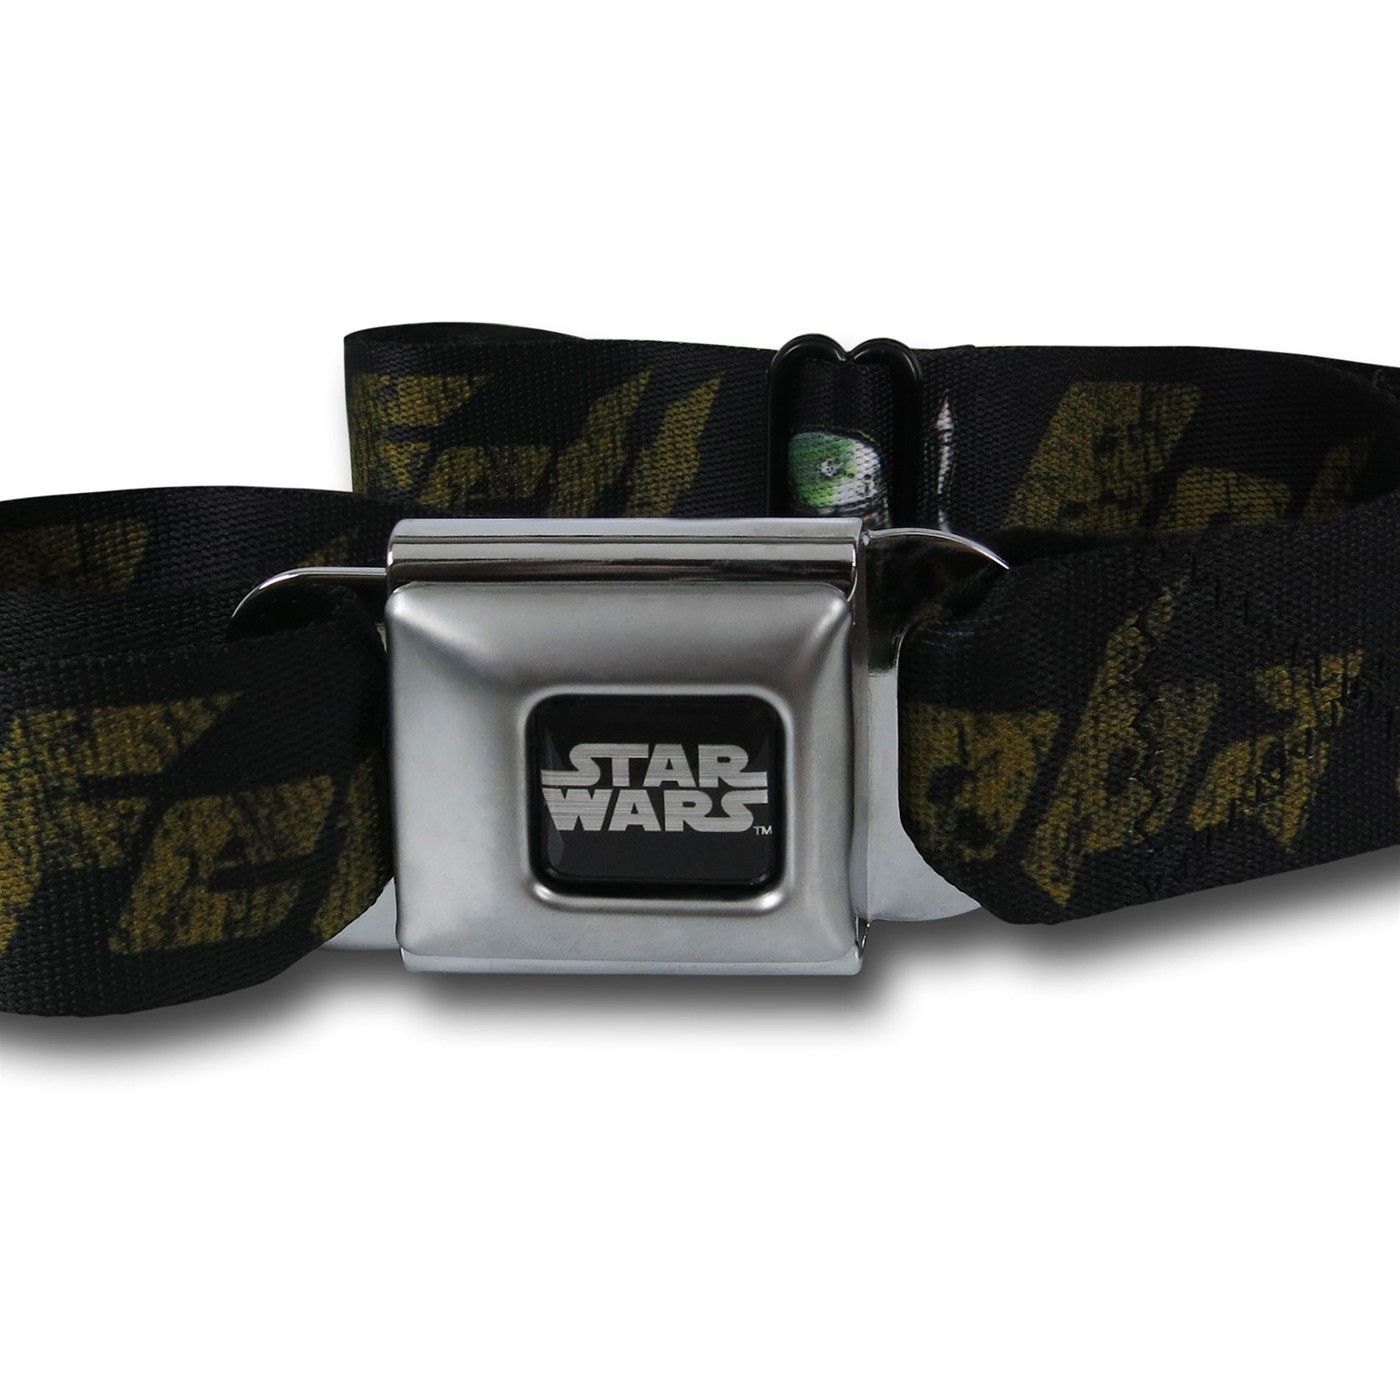 Star Wars Boba Fett Seatbelt Belt